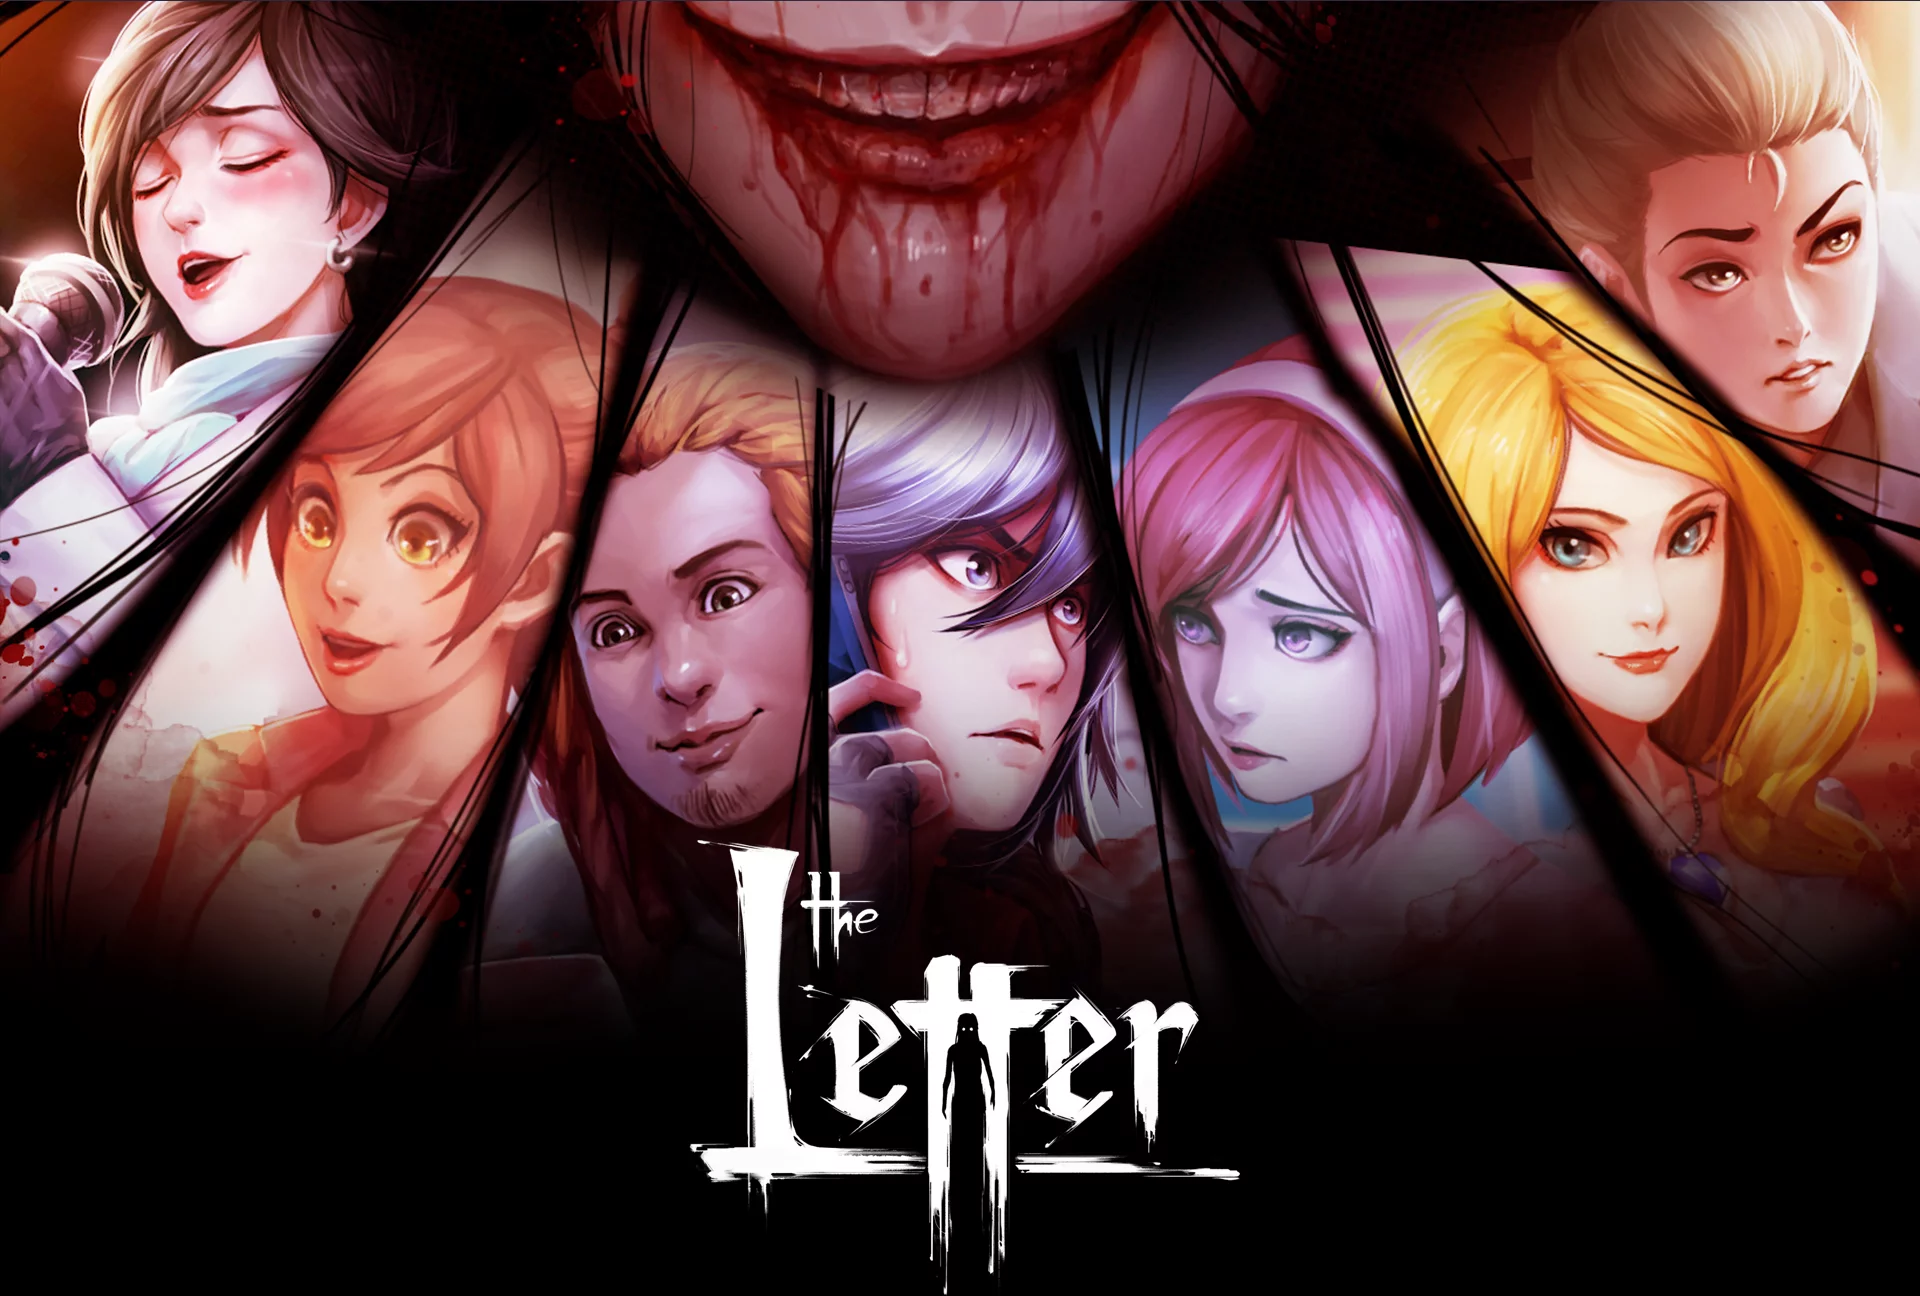 Letters игра. The Letter визуальная новелла. The Letter Horror Visual novel. Визуальные новеллы хоррор. Визуальная новелла ужастик.